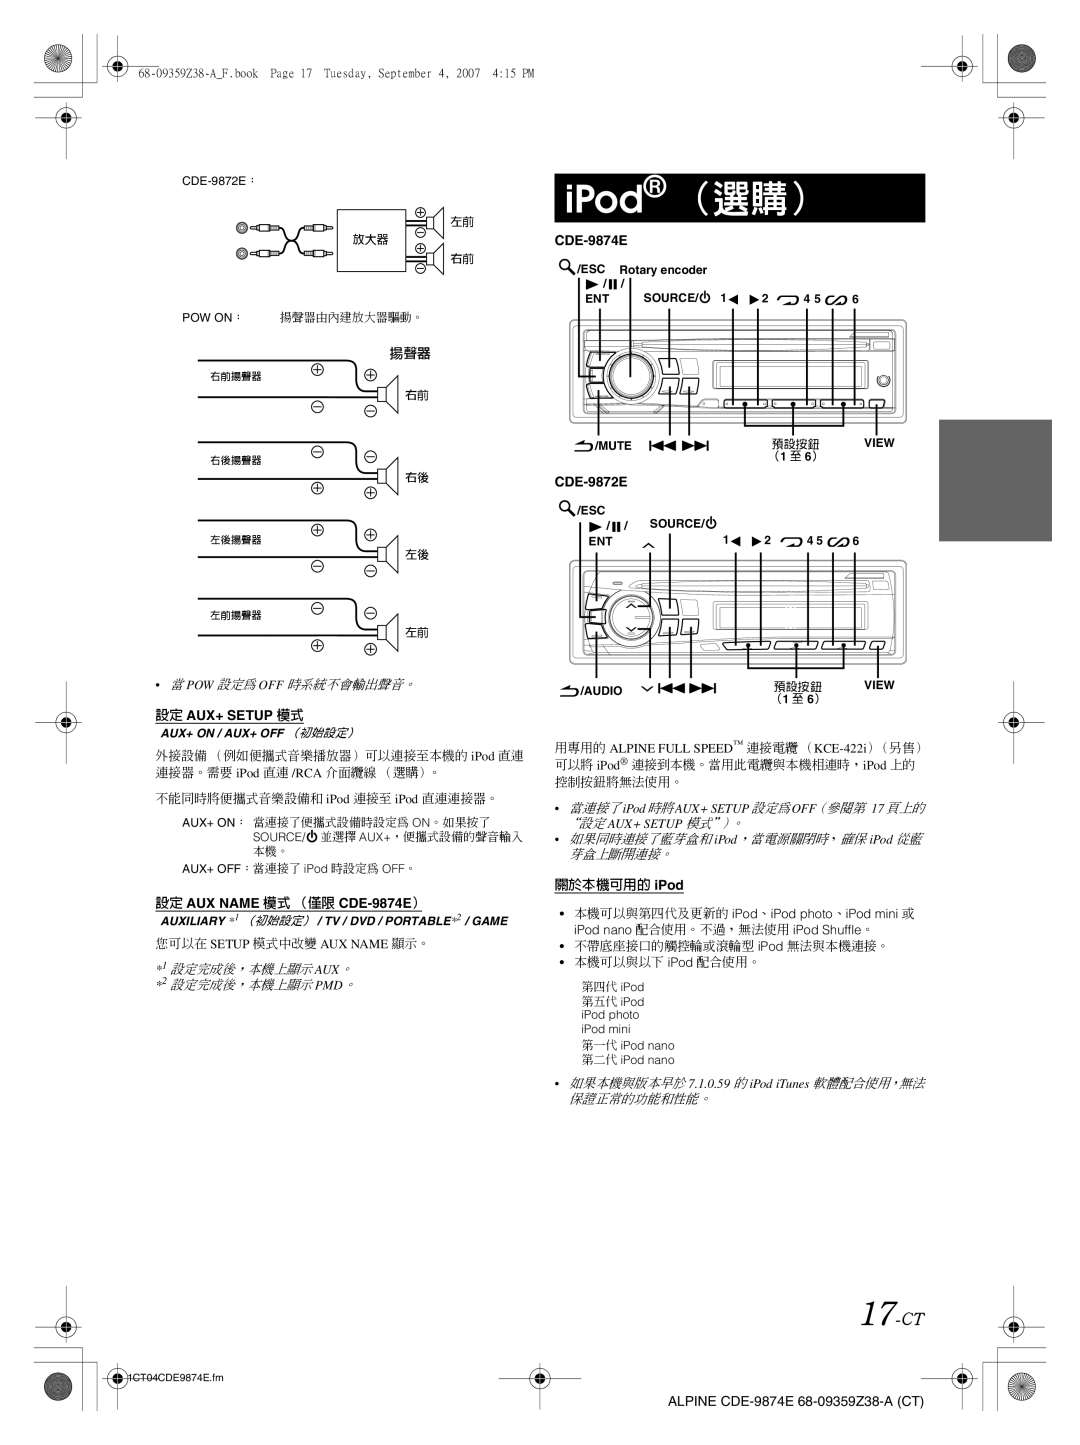 Alpine CDE-9872E owner manual IPod （選購）, 17-CT, 設定 AUX+ Setup 模式, 設定 AUX Name 模式 （僅限 CDE-9874E） 